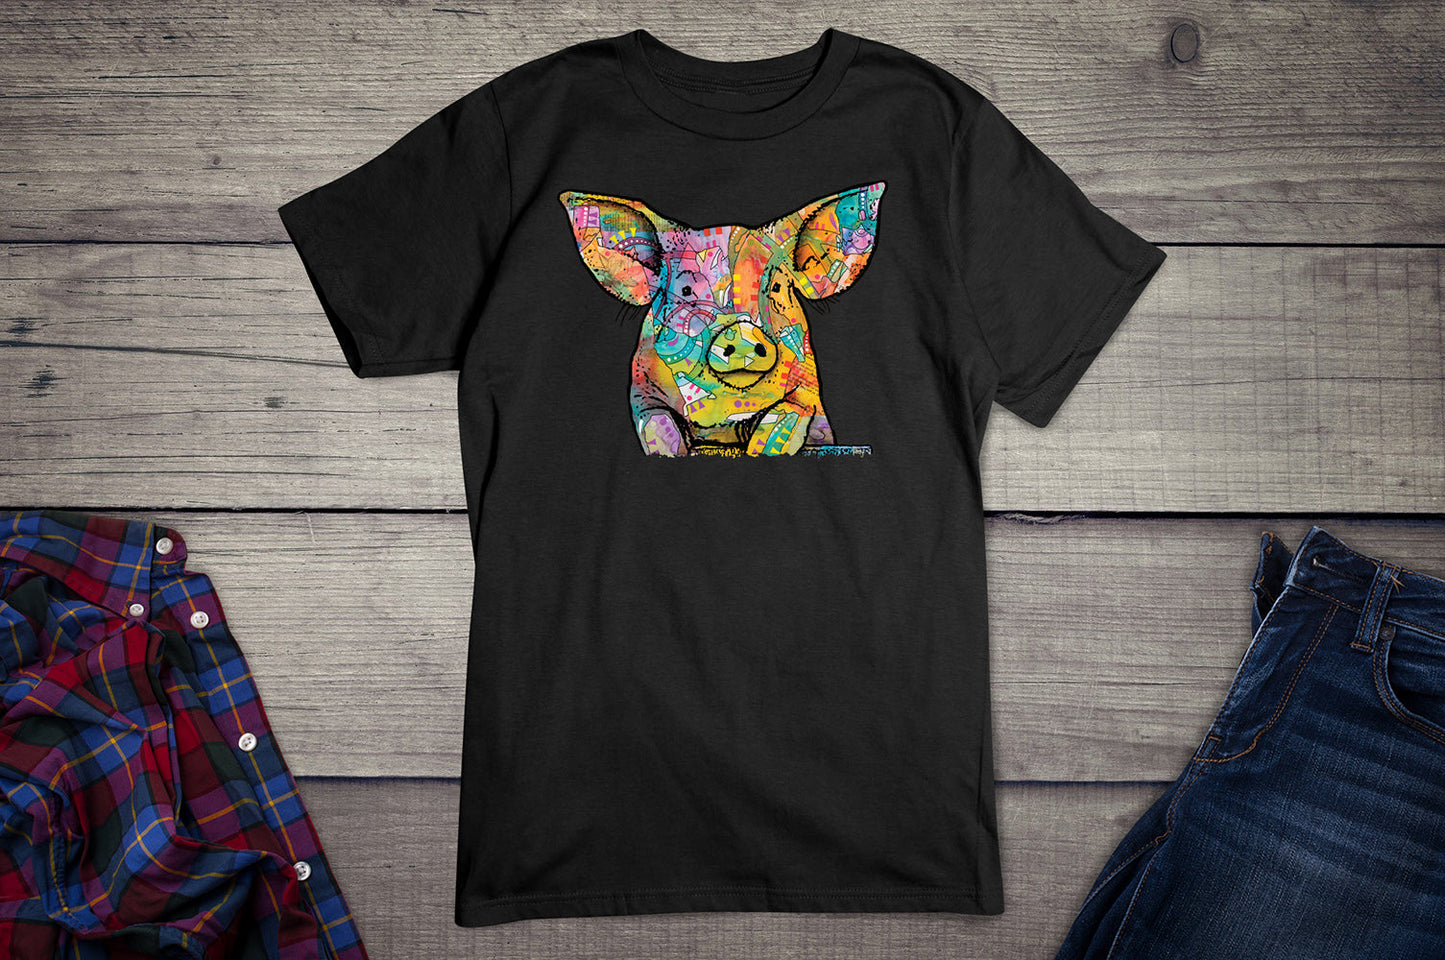 Neon The Pig T-shirt